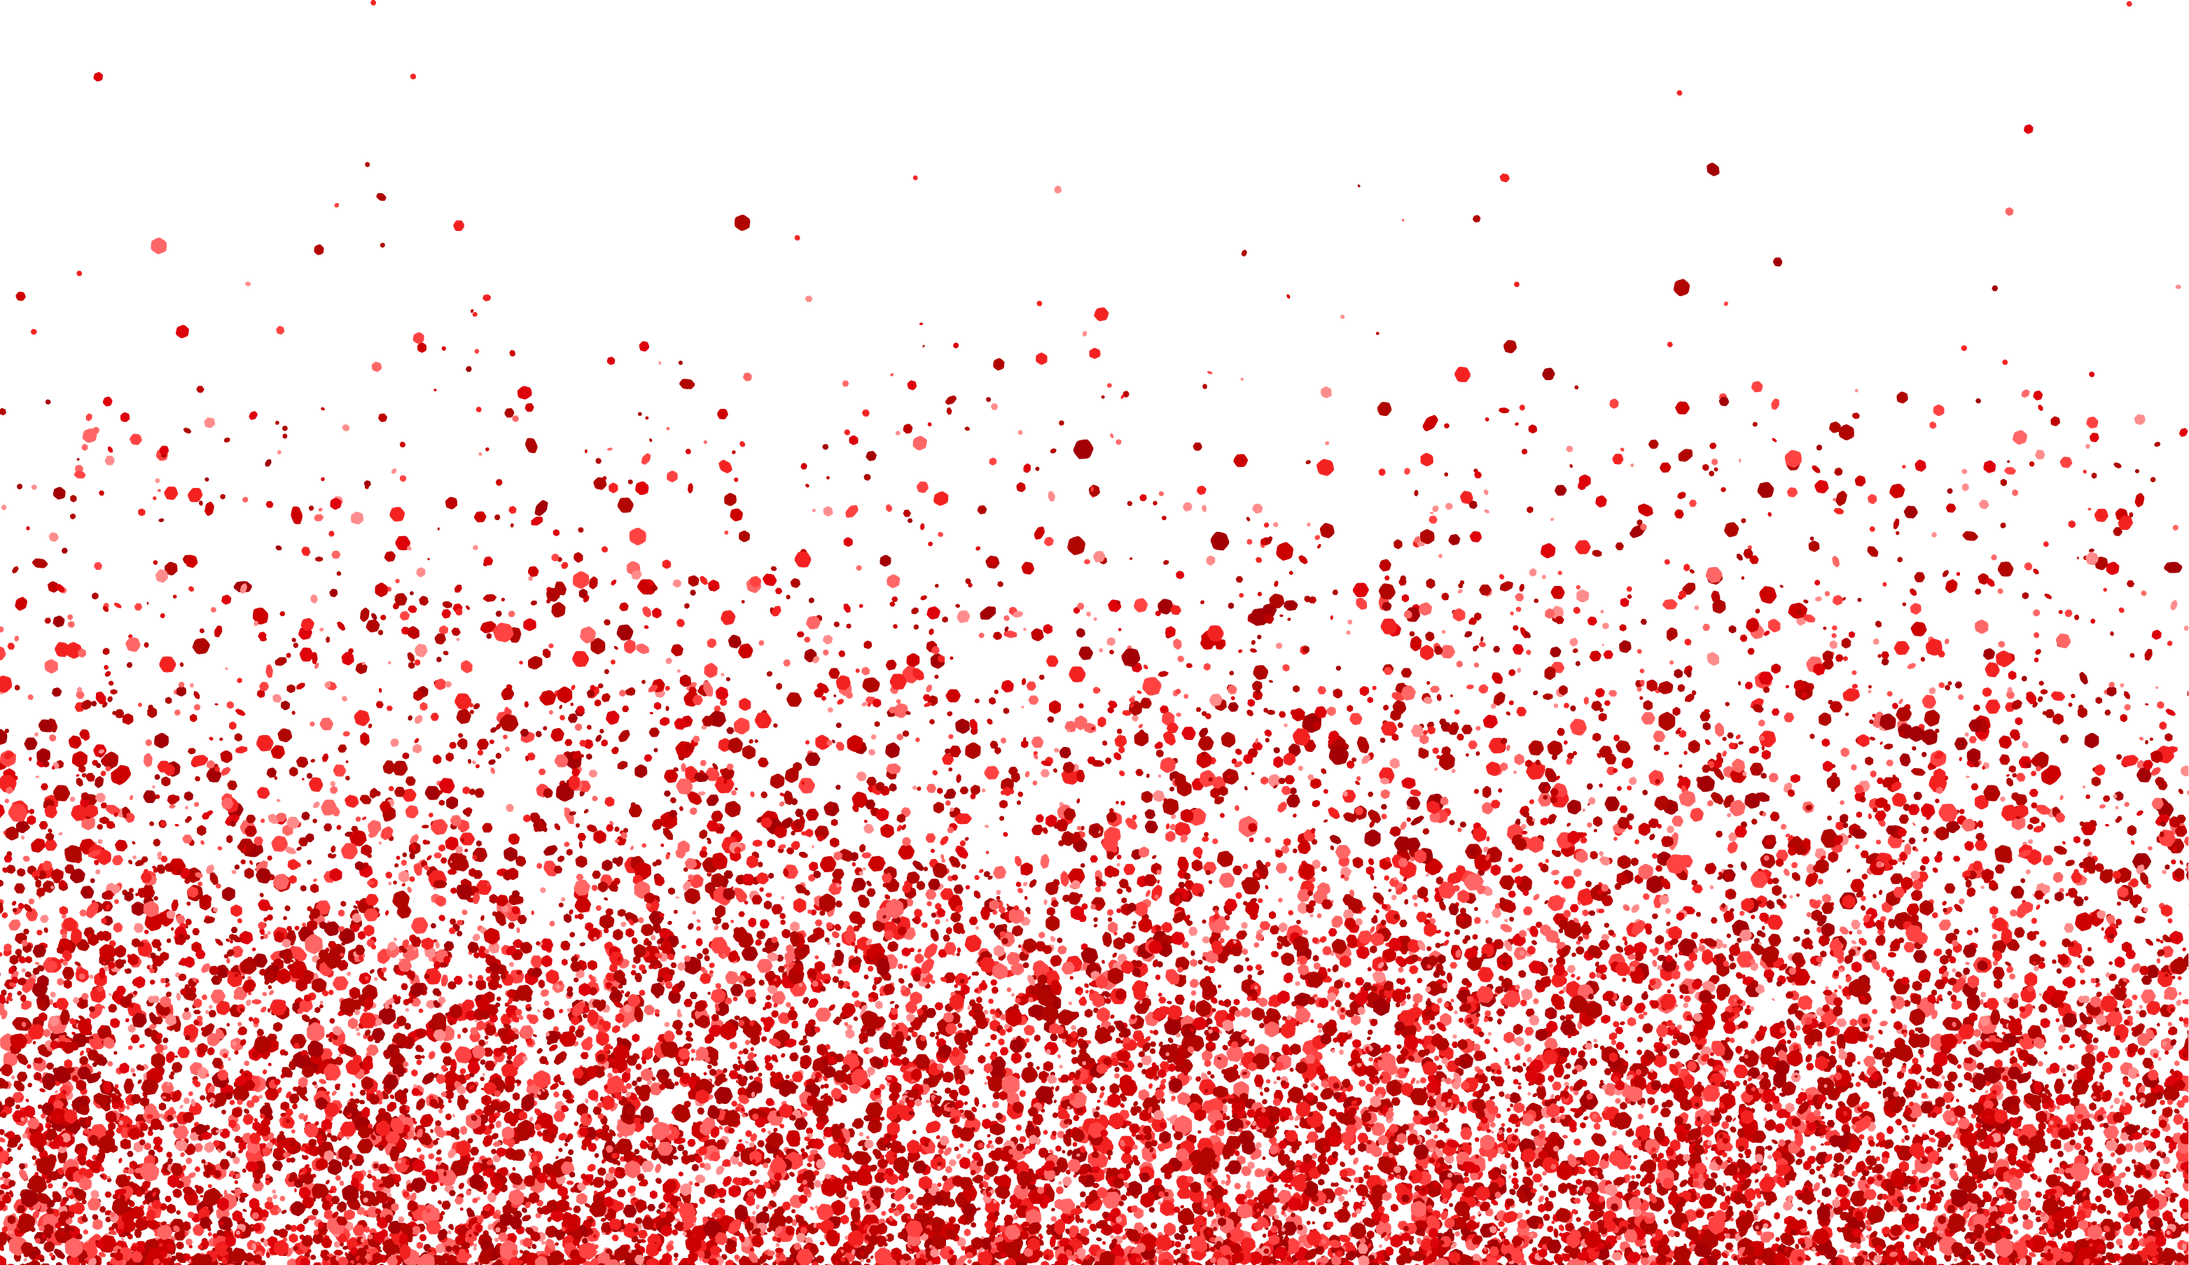 Red sparkling glitter scattered